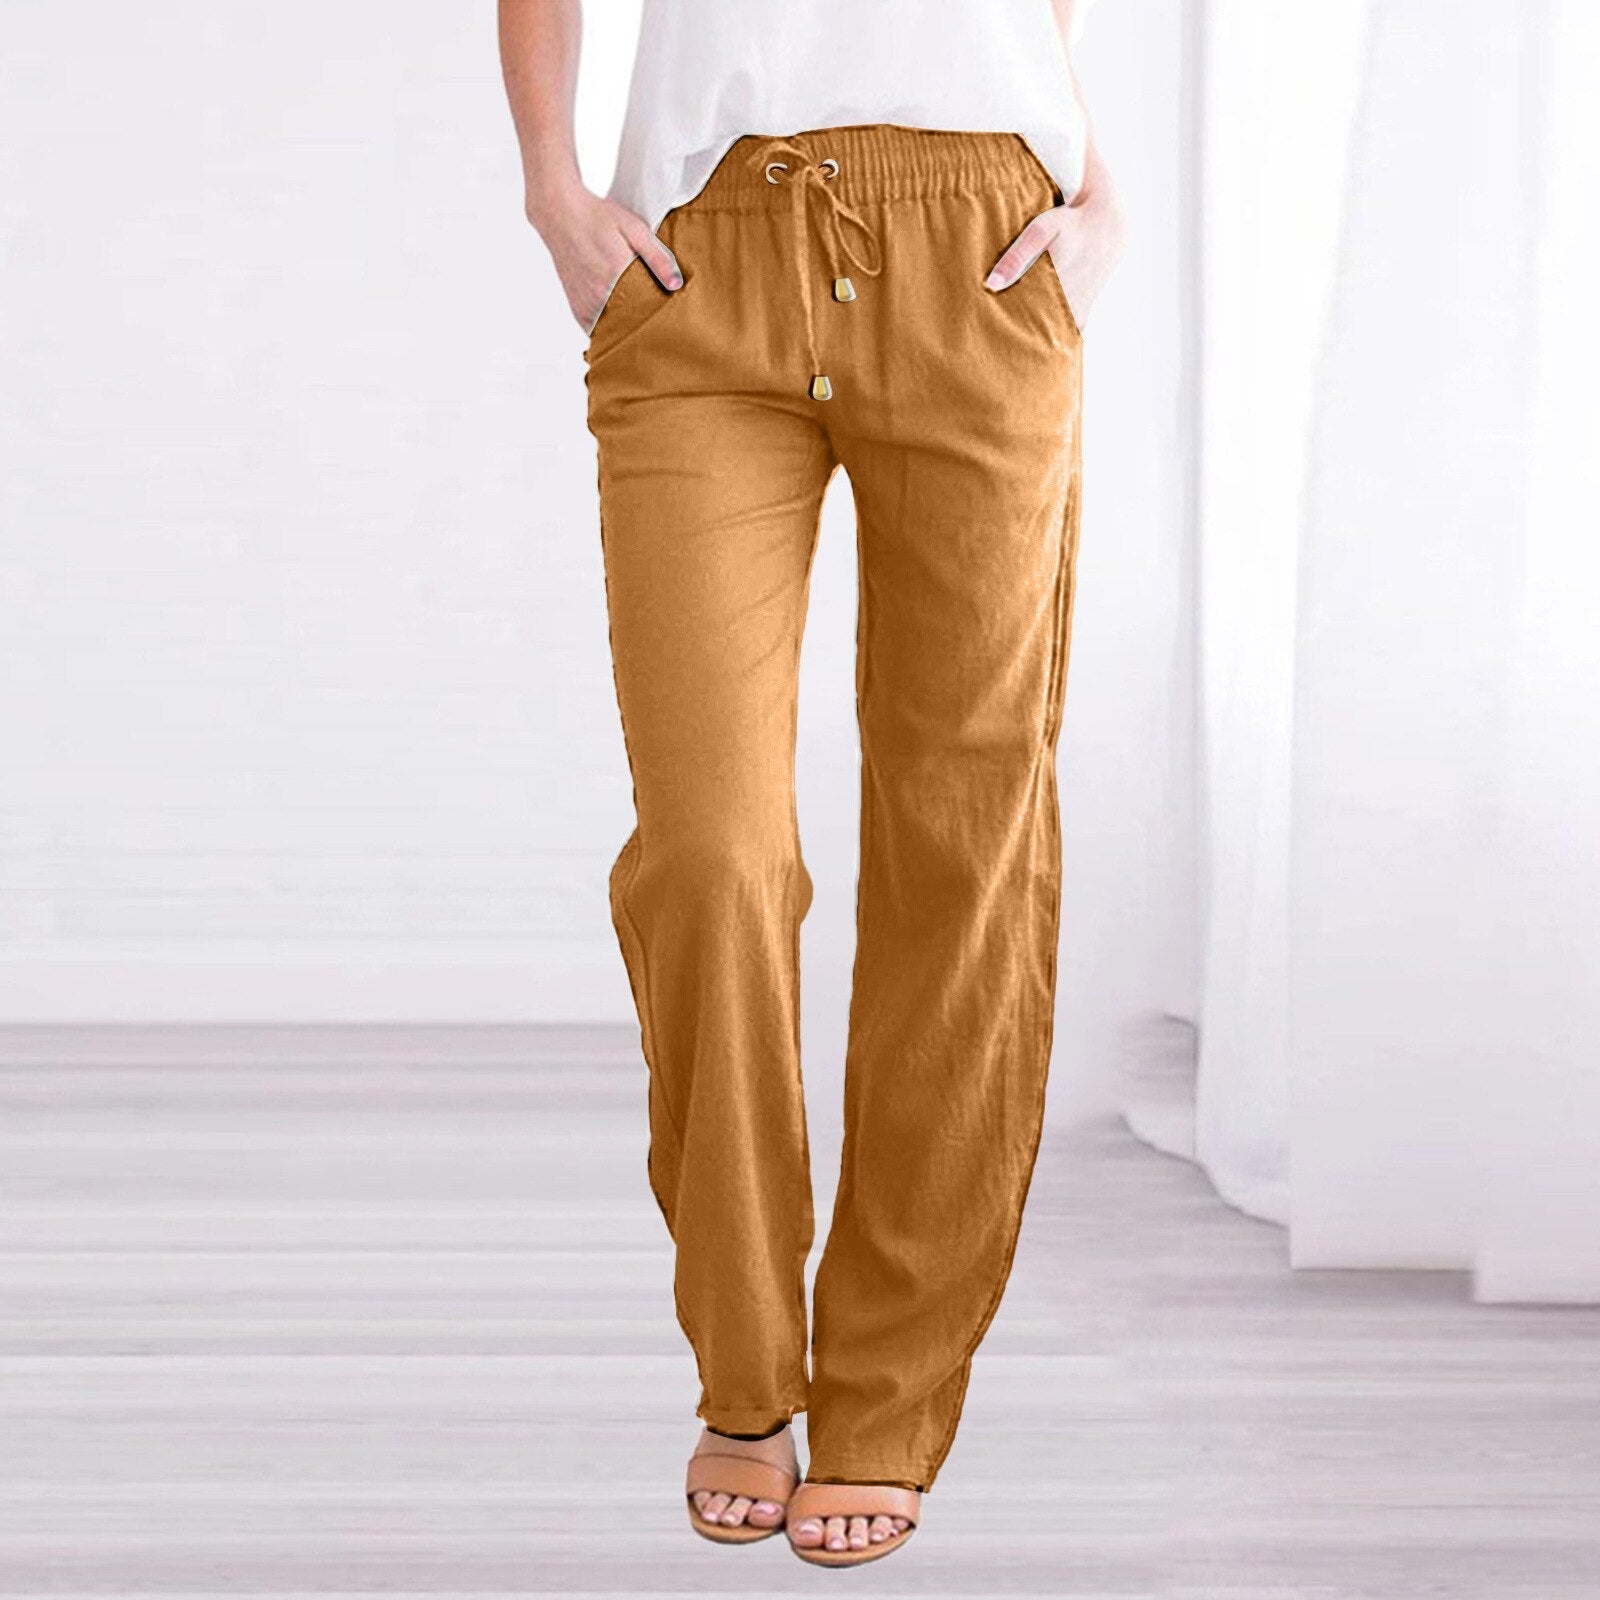 KIHOUT Pants For Women Deals Summer Casual Loose Pockest Elastic Waist  Solid Trousers Capris Pants 